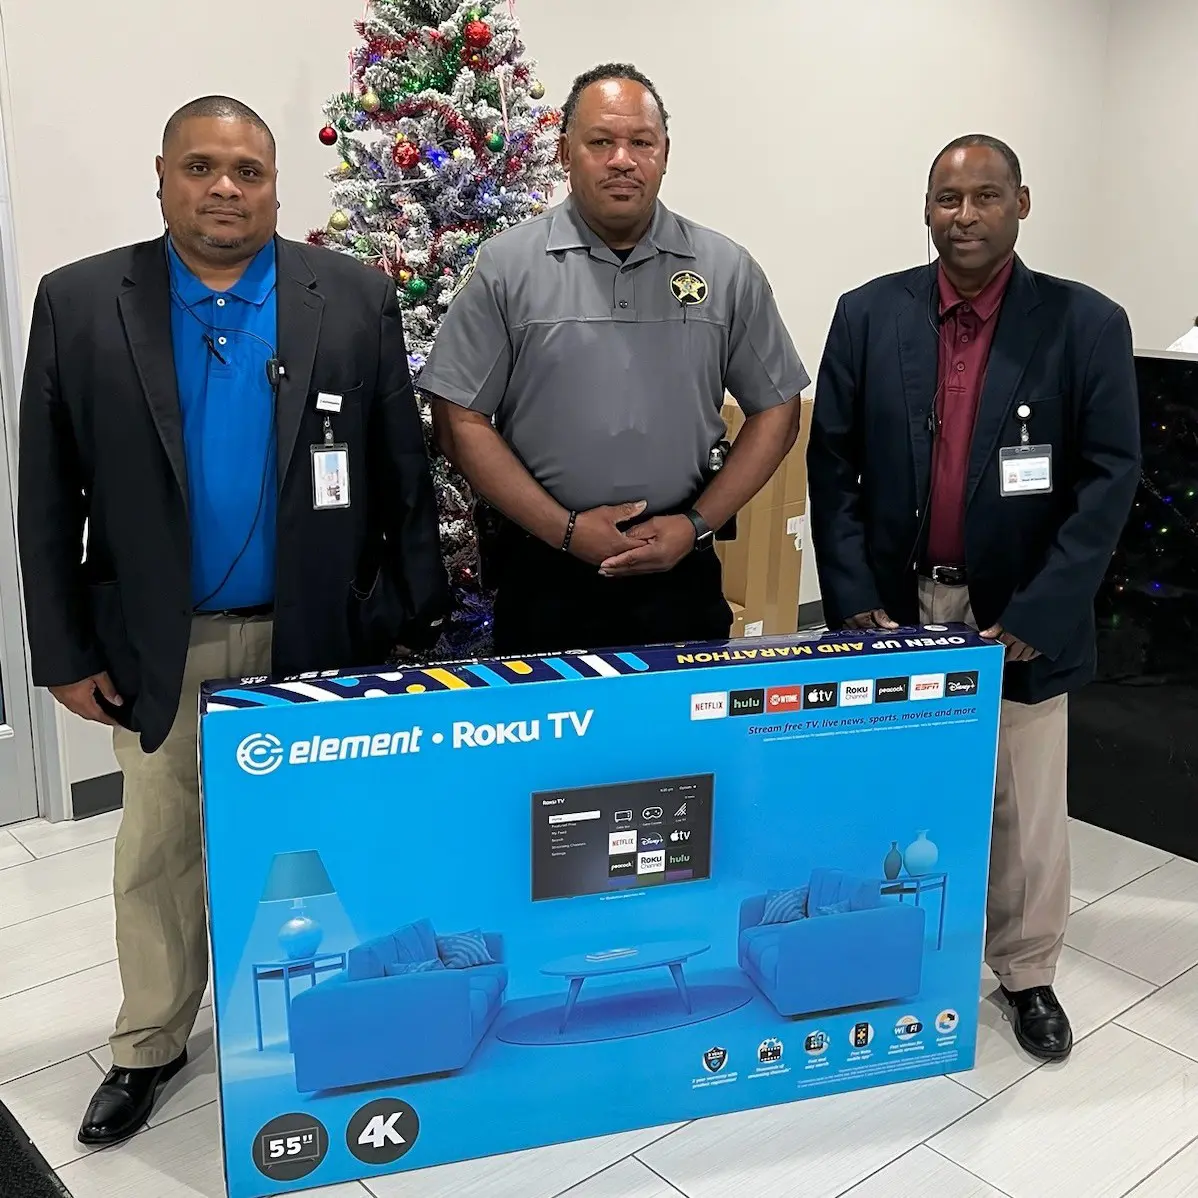 Three men posing with an Element TV box